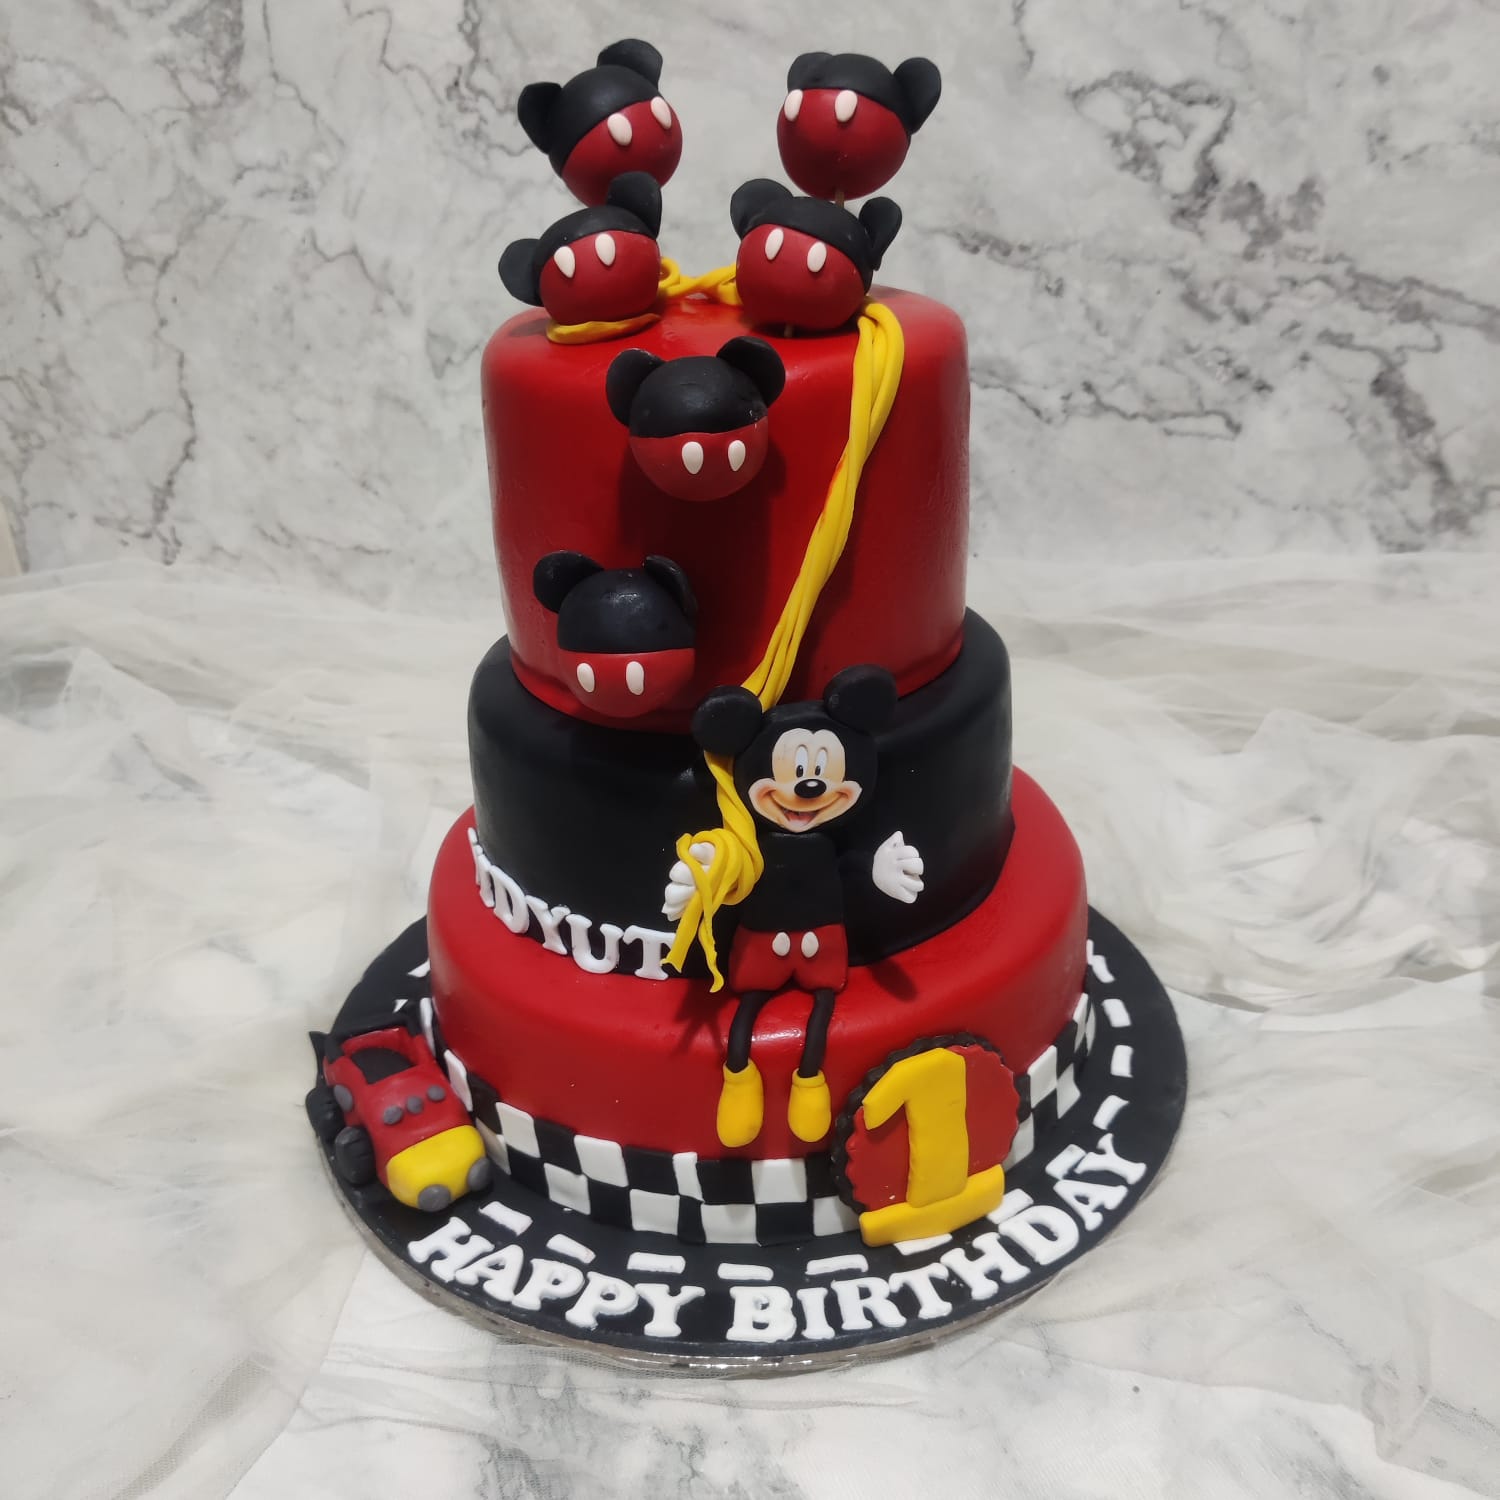 12th Birthday Cake For Girl Special Way Wish Birthday To Someone |  emjmarketing.com